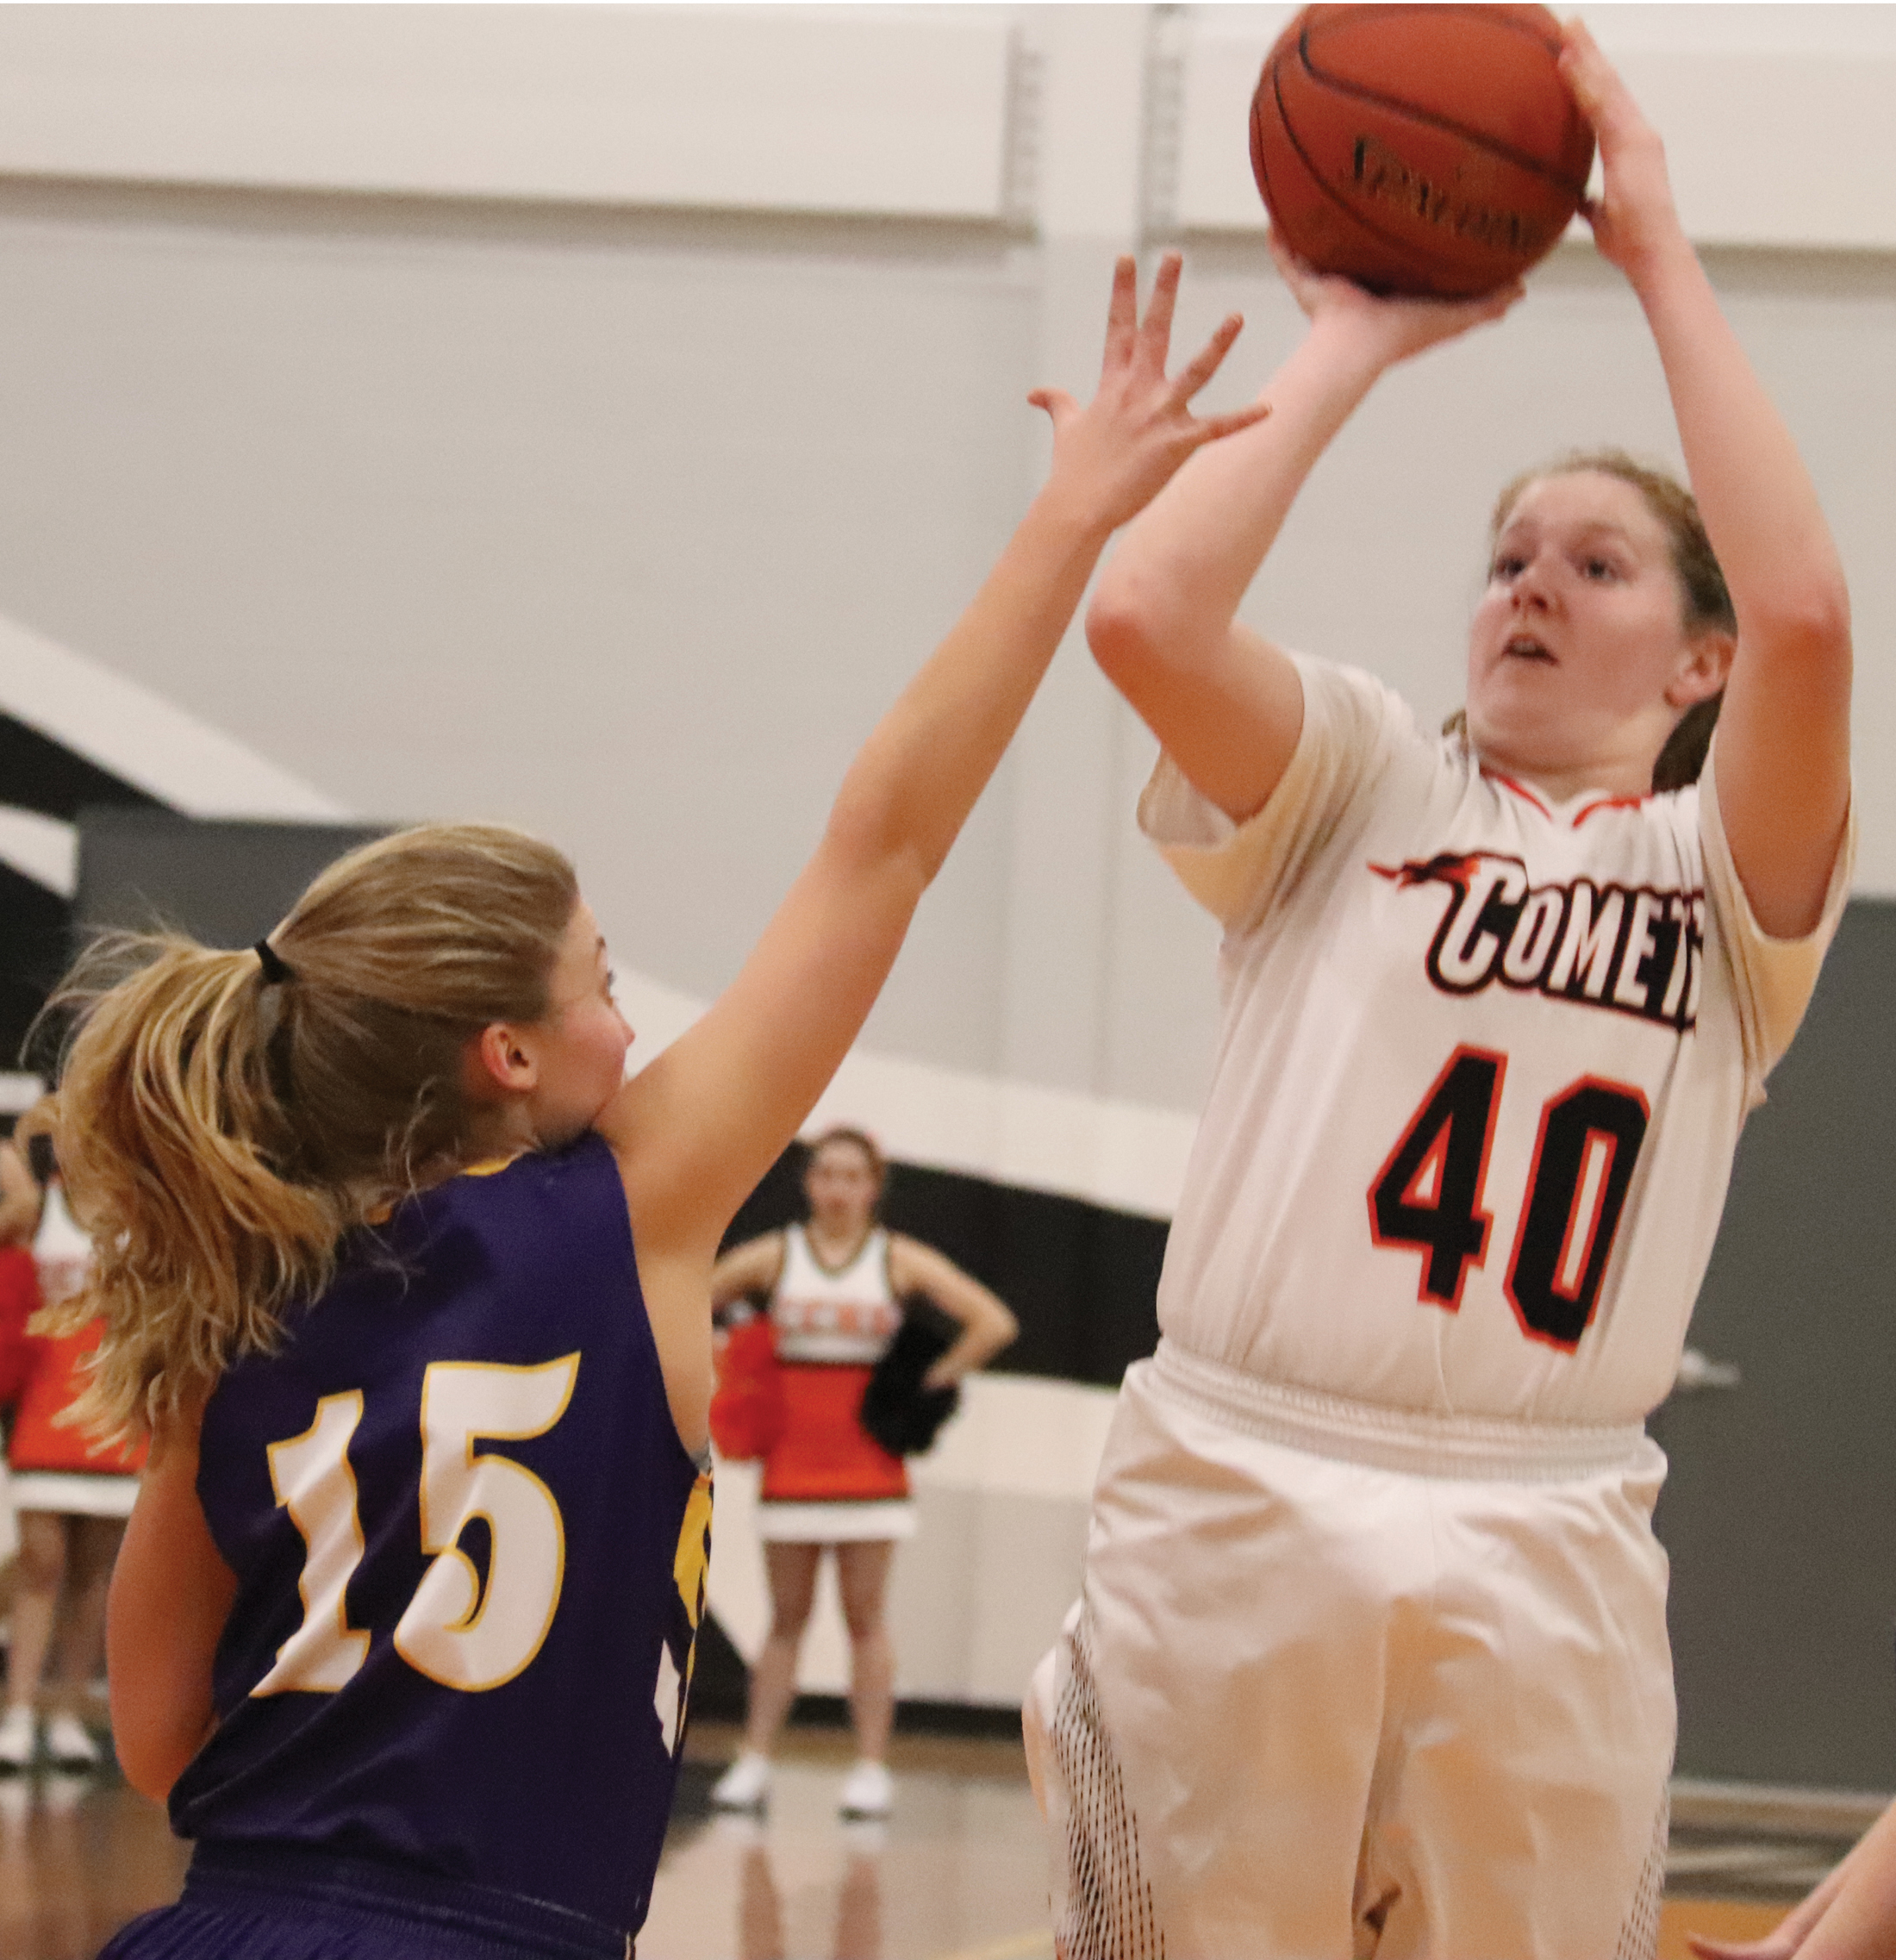 Sindlinger, Hoeft named to All-NEIC girls basketball teams